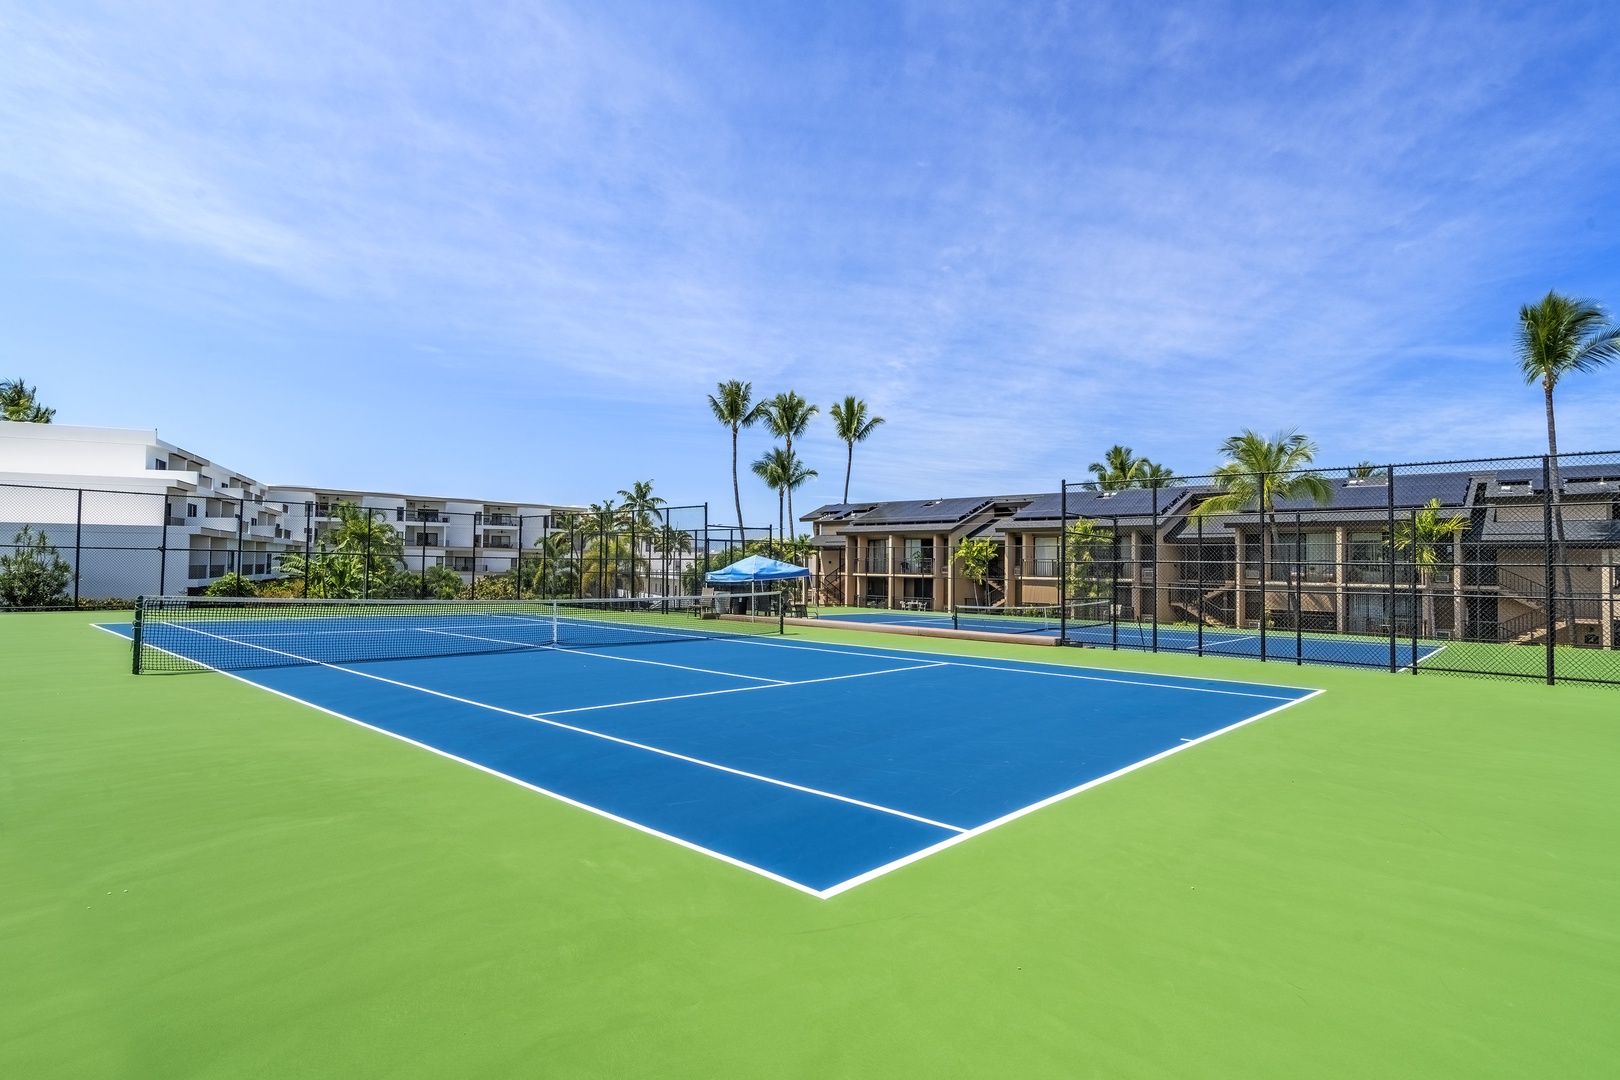 Kailua Kona Vacation Rentals, Kona Makai 3102 - Kona Makai complex Tennis Courts